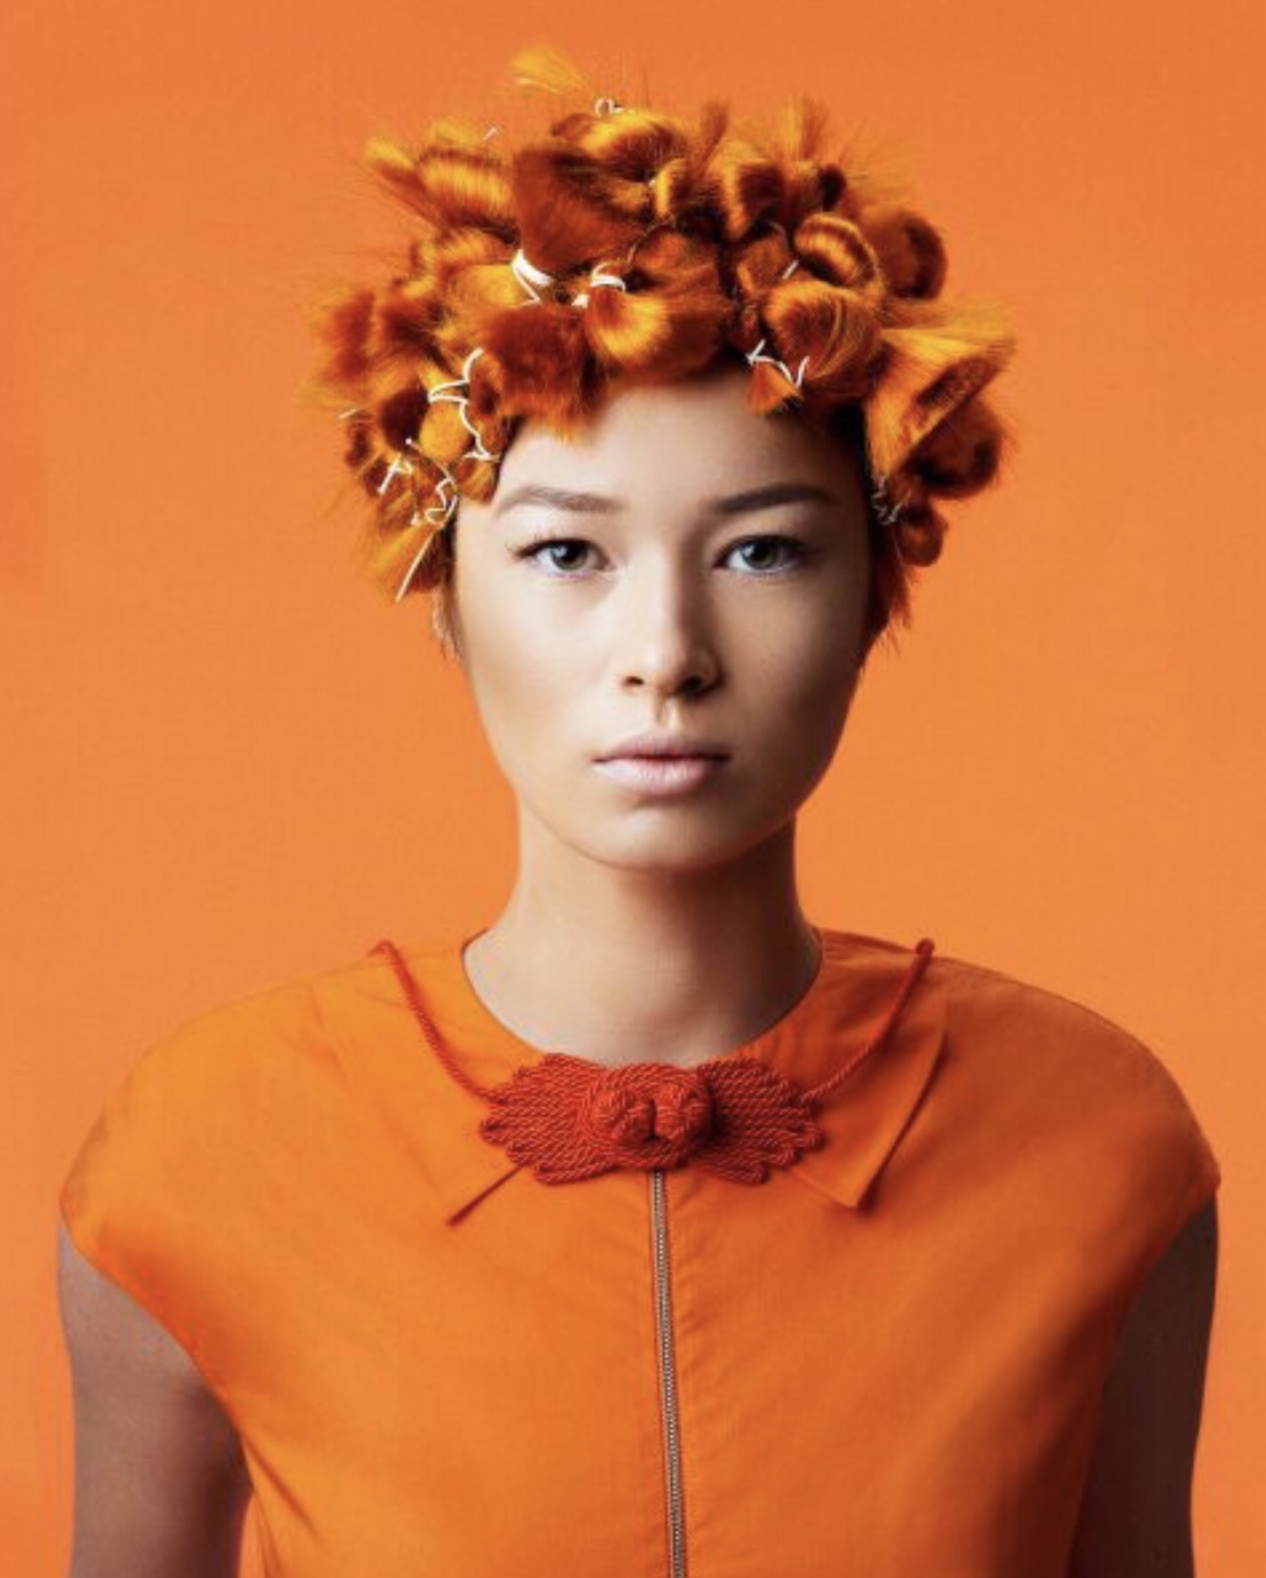 Woman with stylish, orange haircut set on an orange background